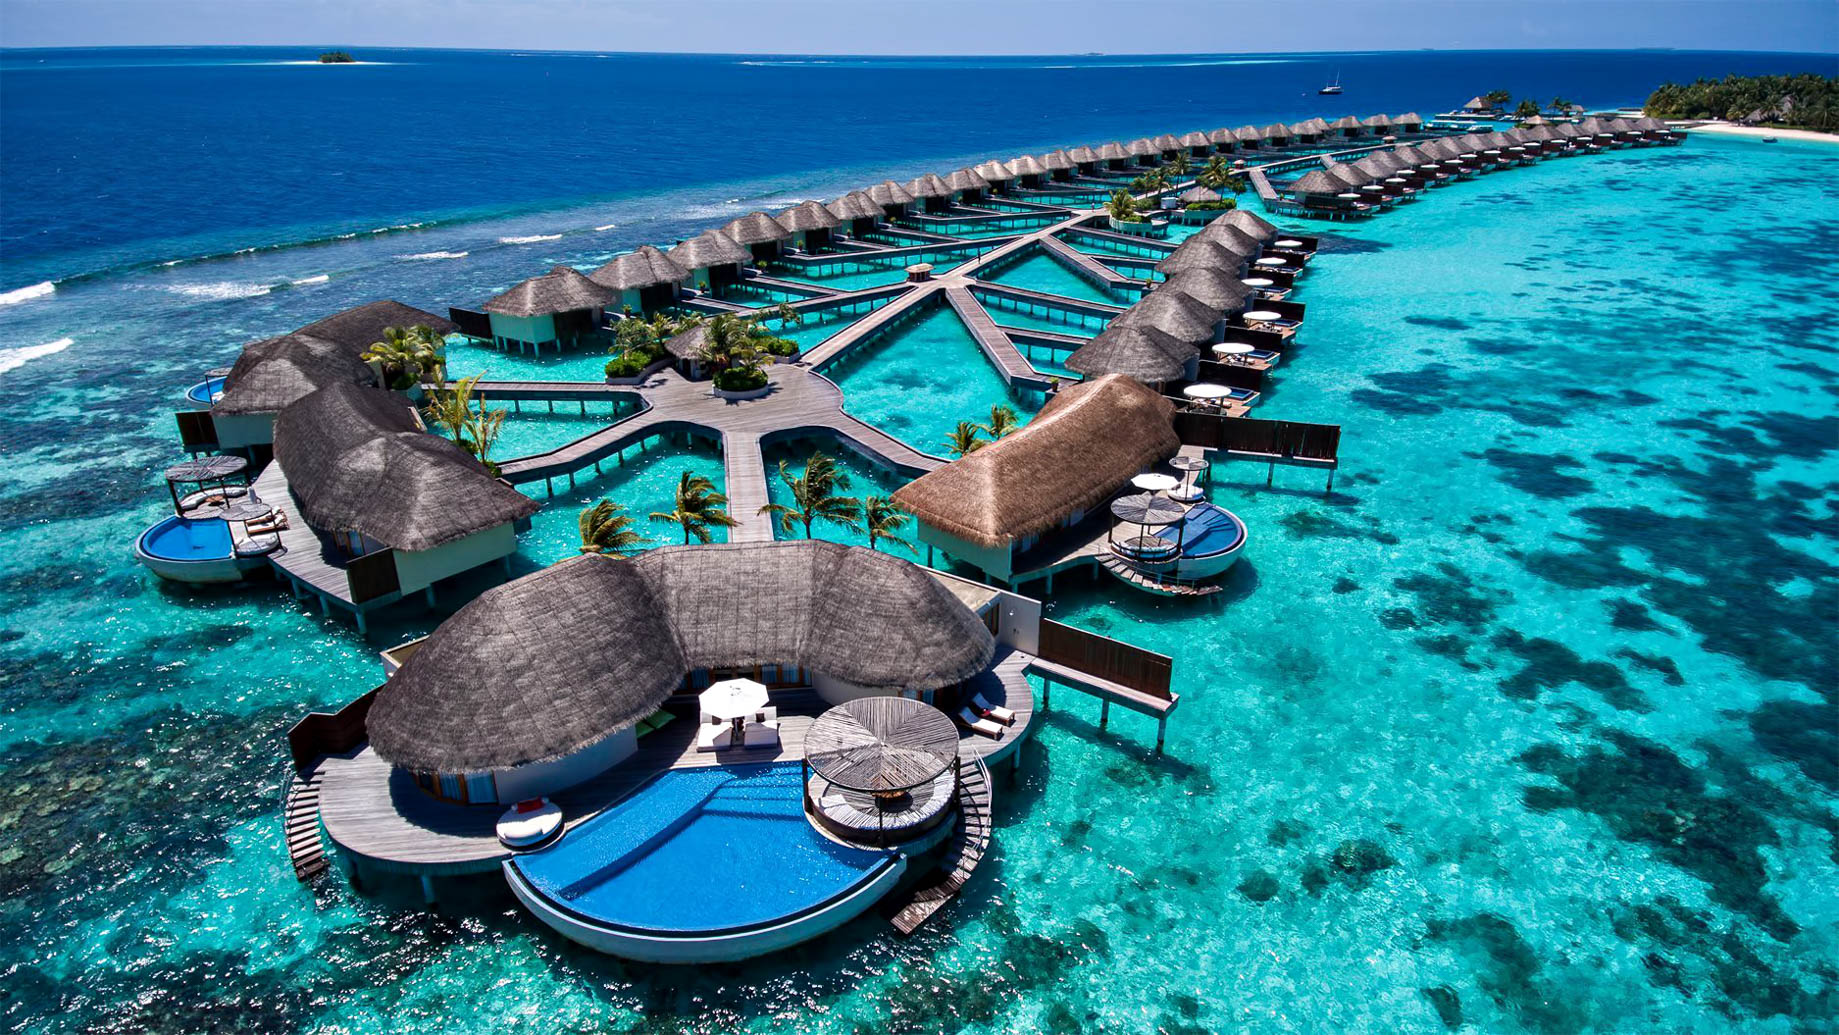 030 – W Maldives Resort – Fesdu Island, Maldives – Overwater Bungalows Aerial View